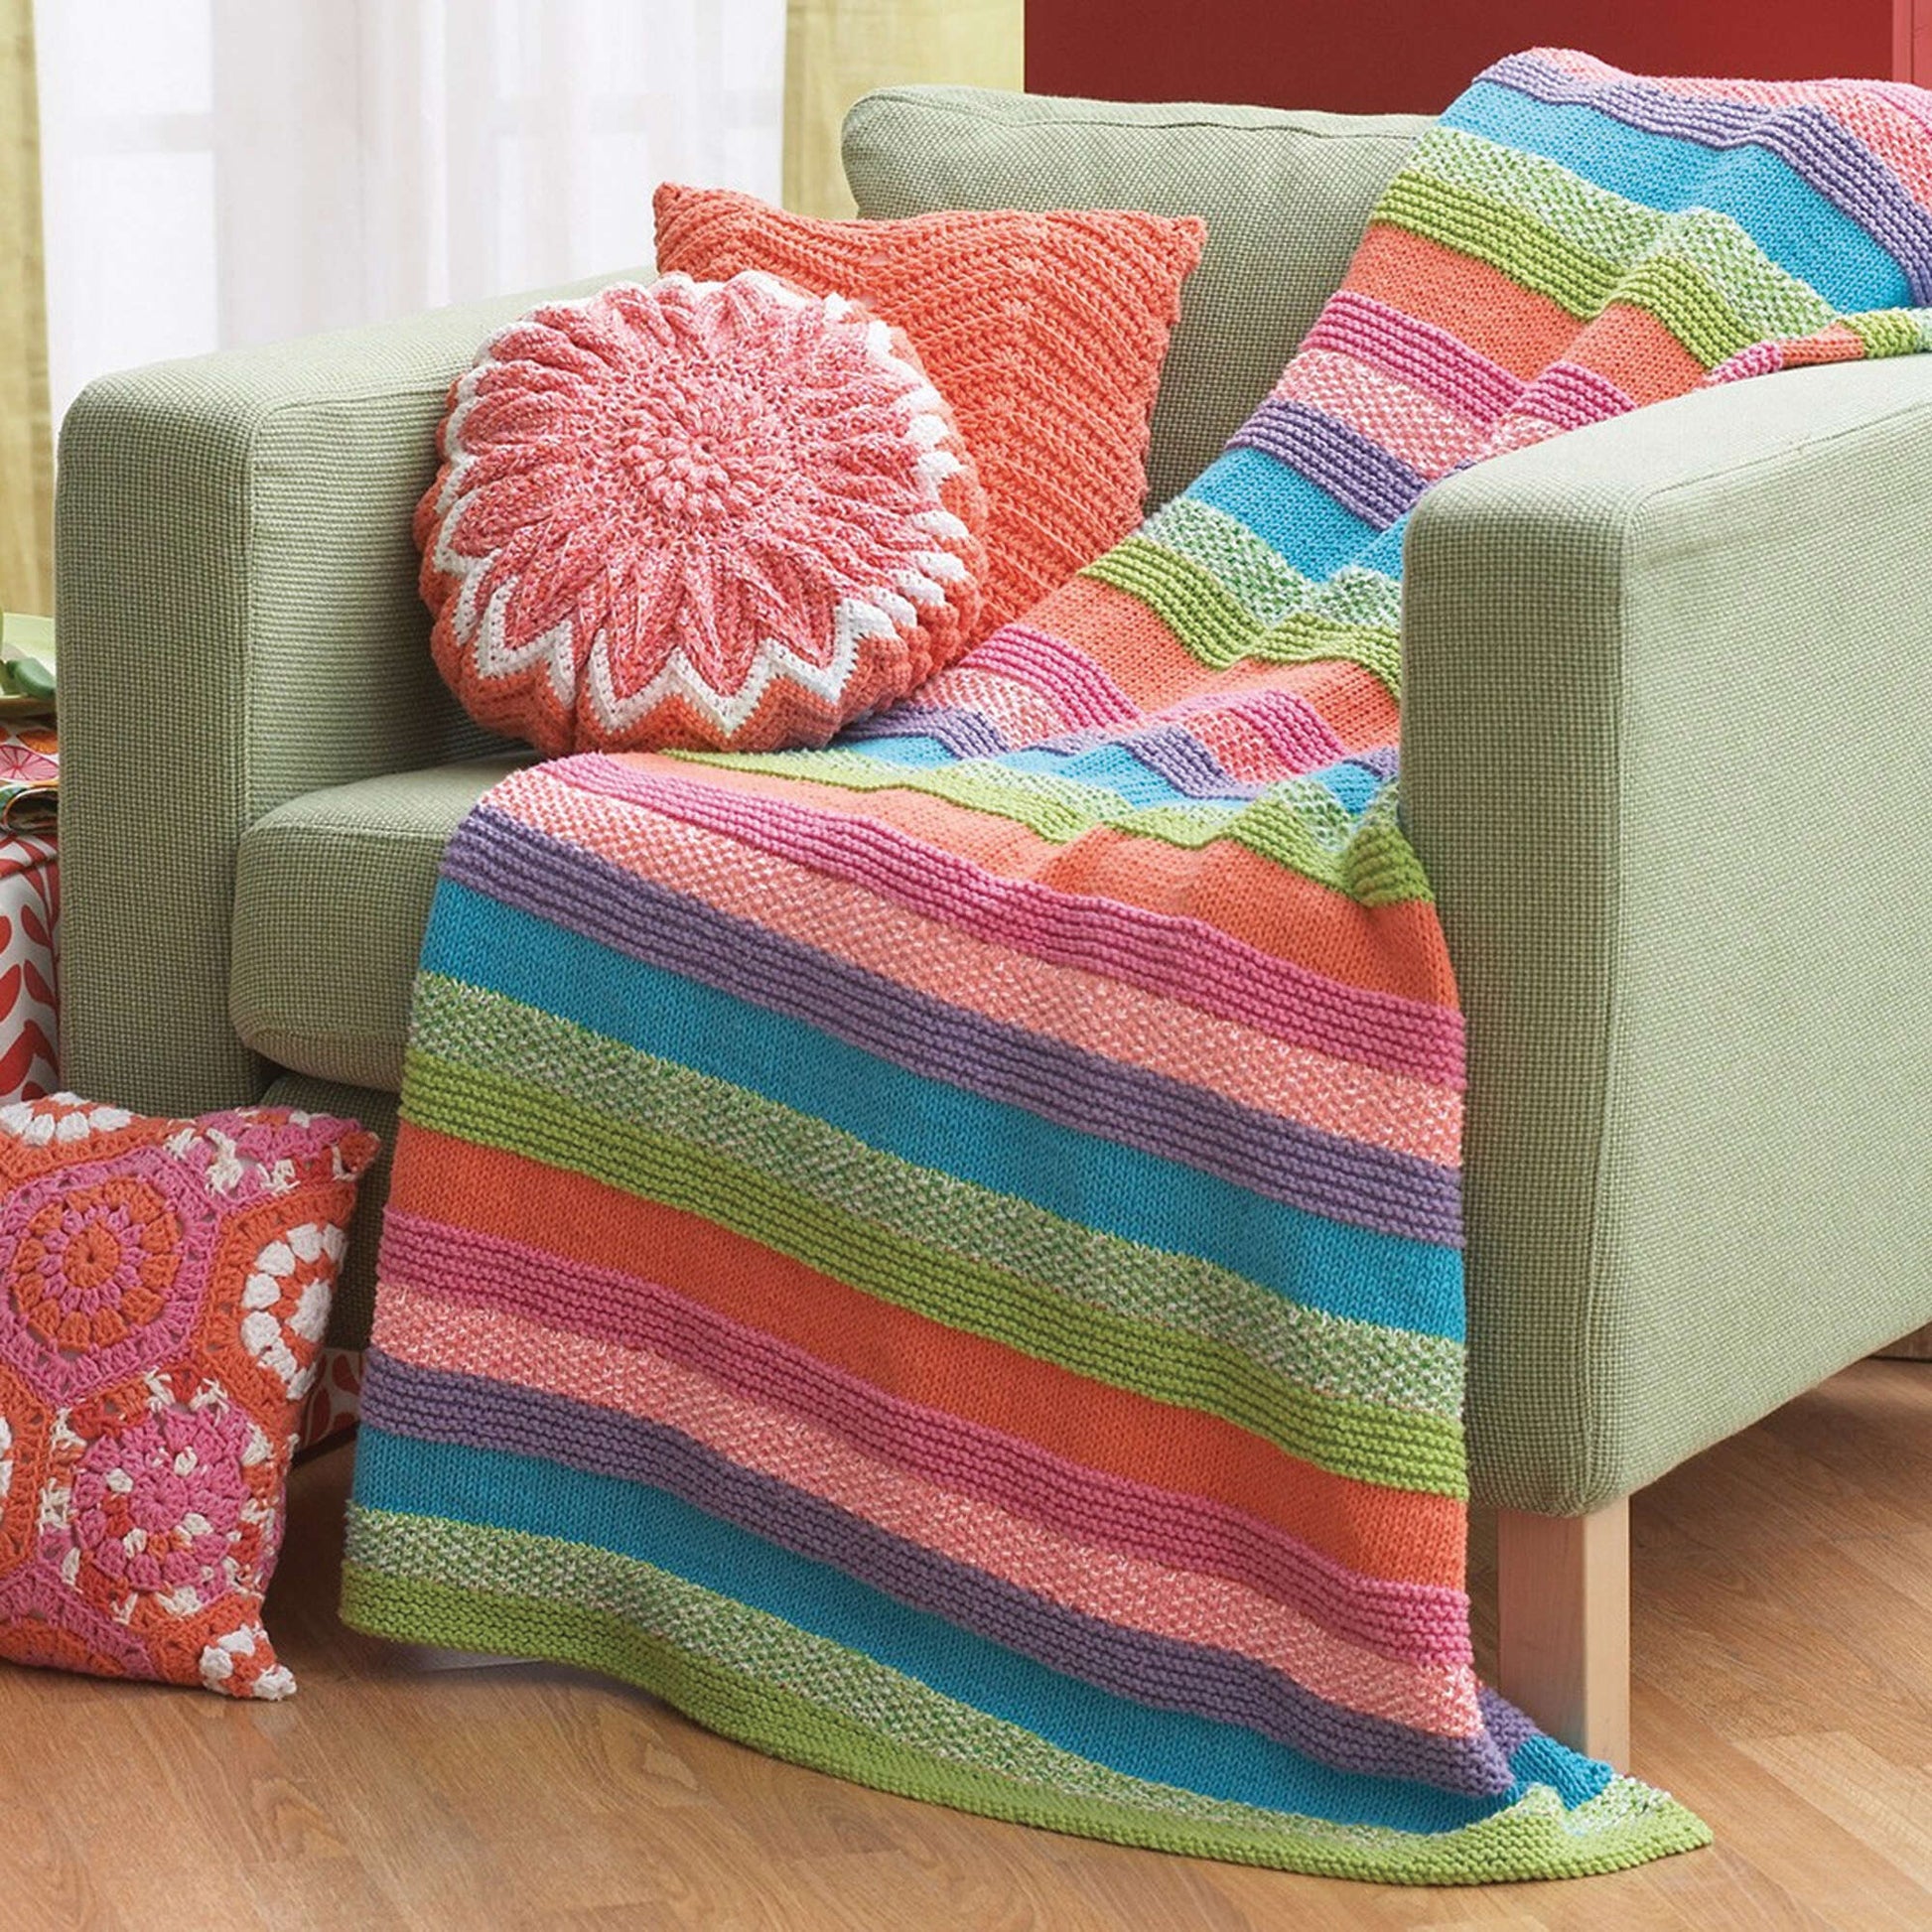 Free Lily Sugar 'n Cream Striped Knit Blanket Pattern